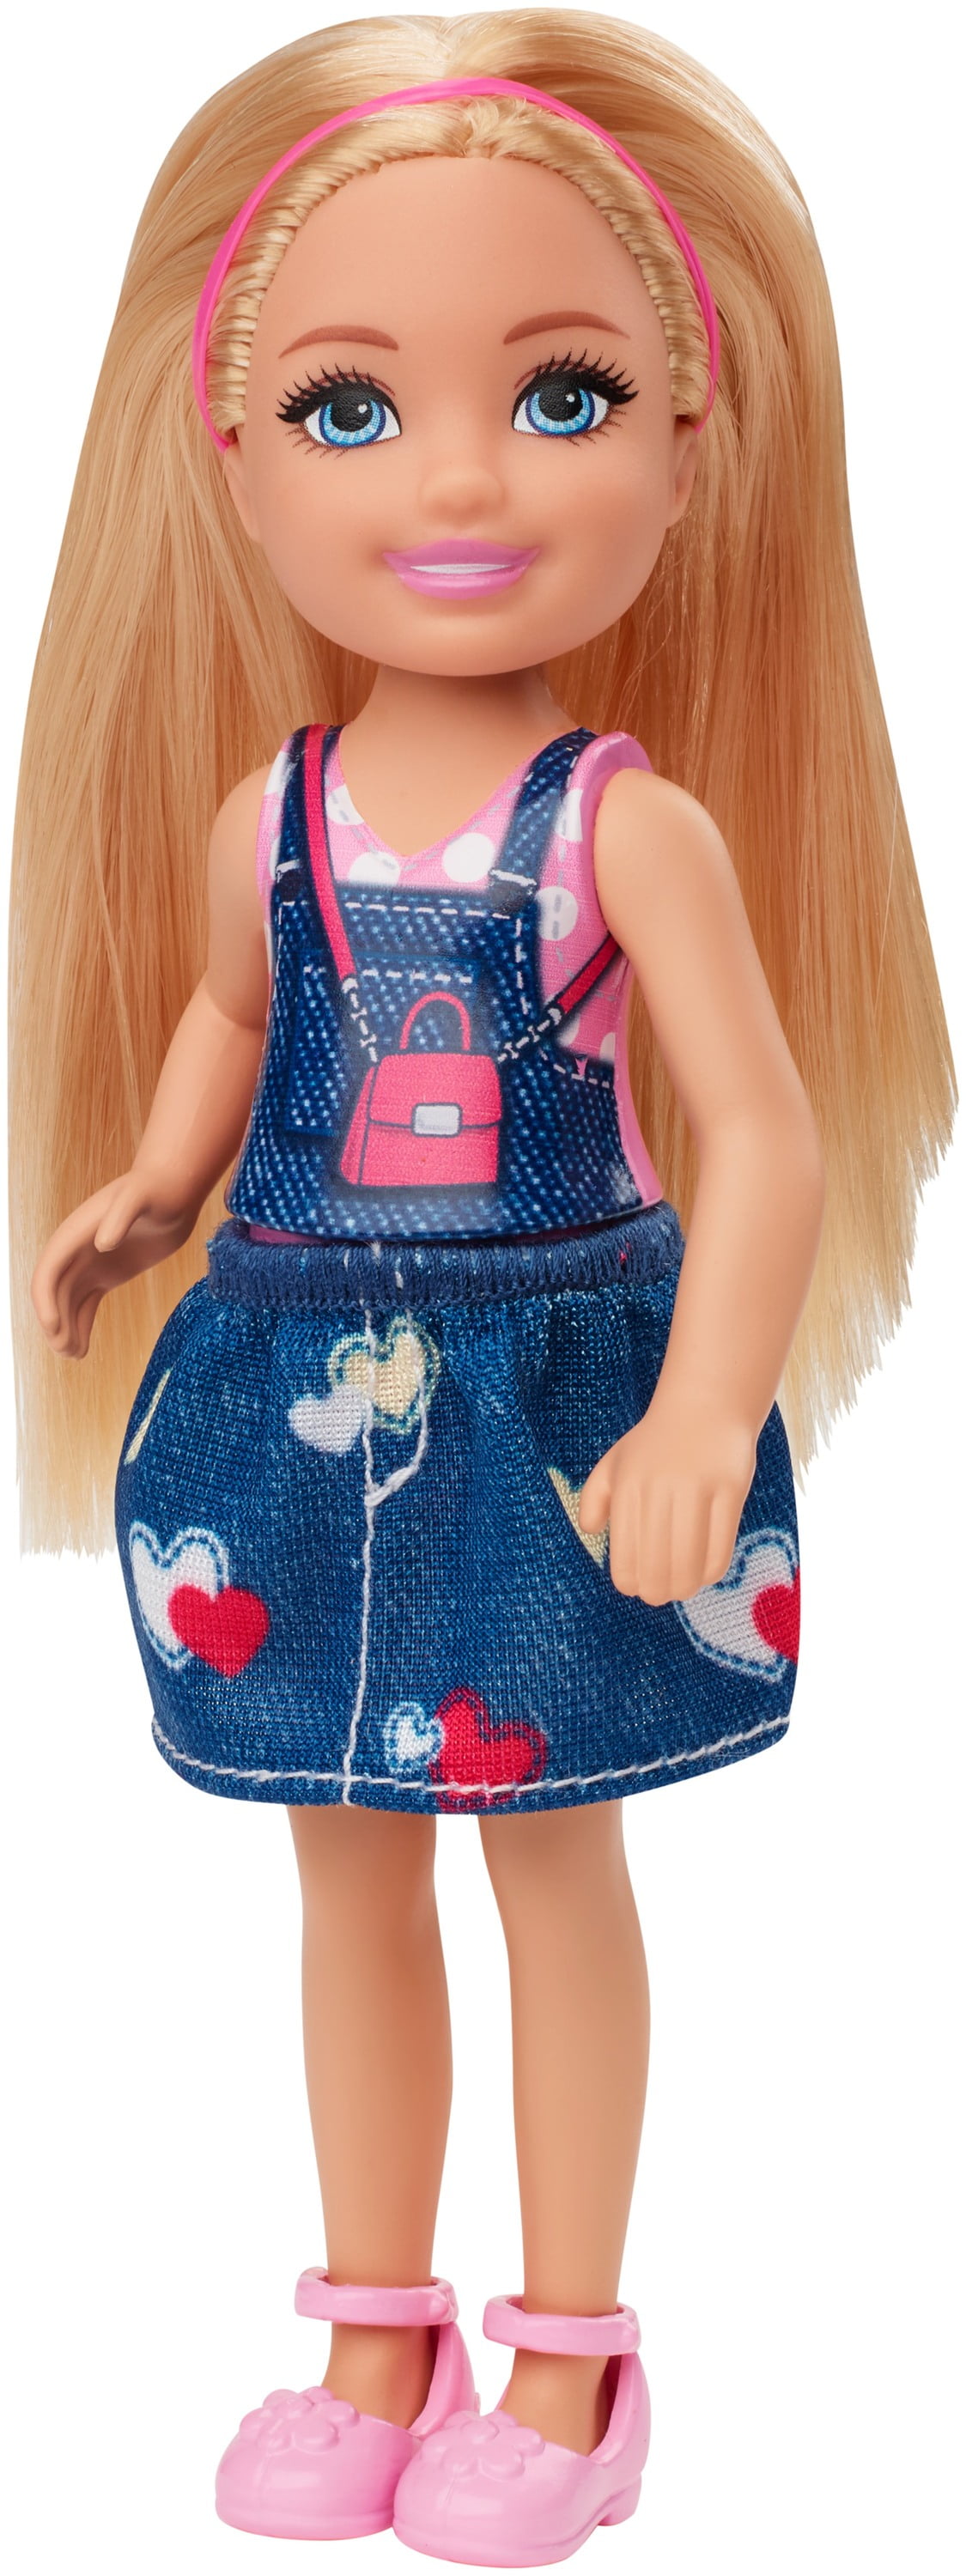 Barbie Chelsea Barbie Club Dolls Boy SK8 Board Top Sloth Girl BRAND NEW ...